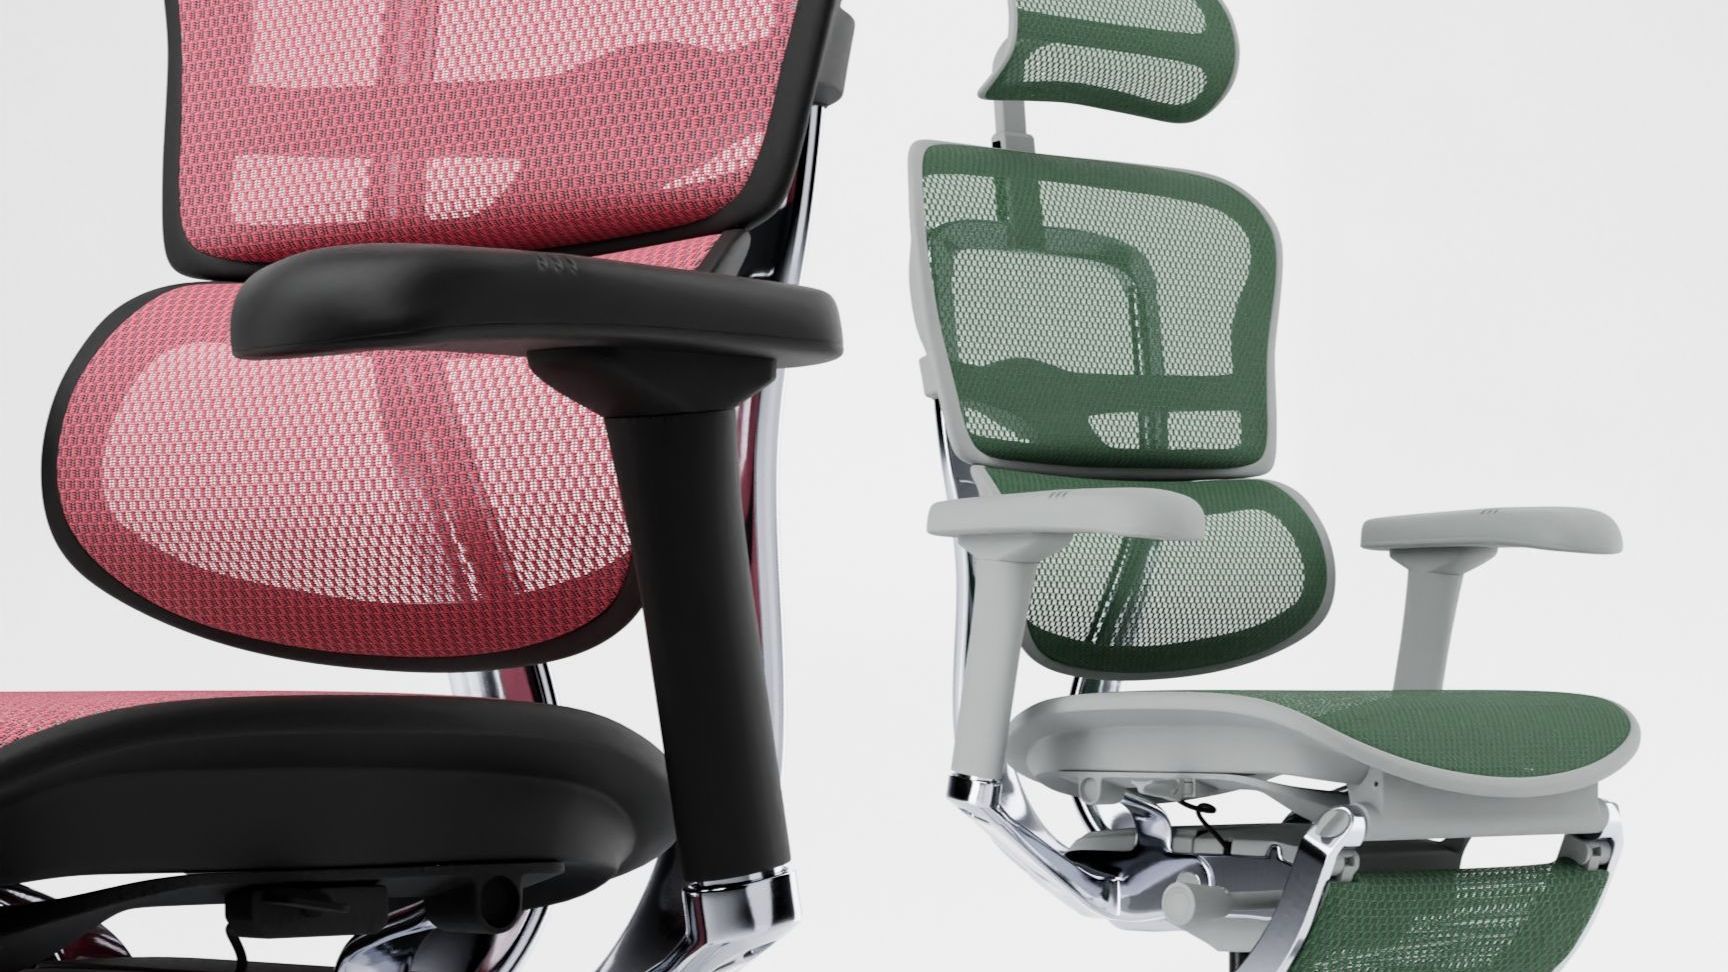 Ergohuman Elite generation two ergonomic office chairs